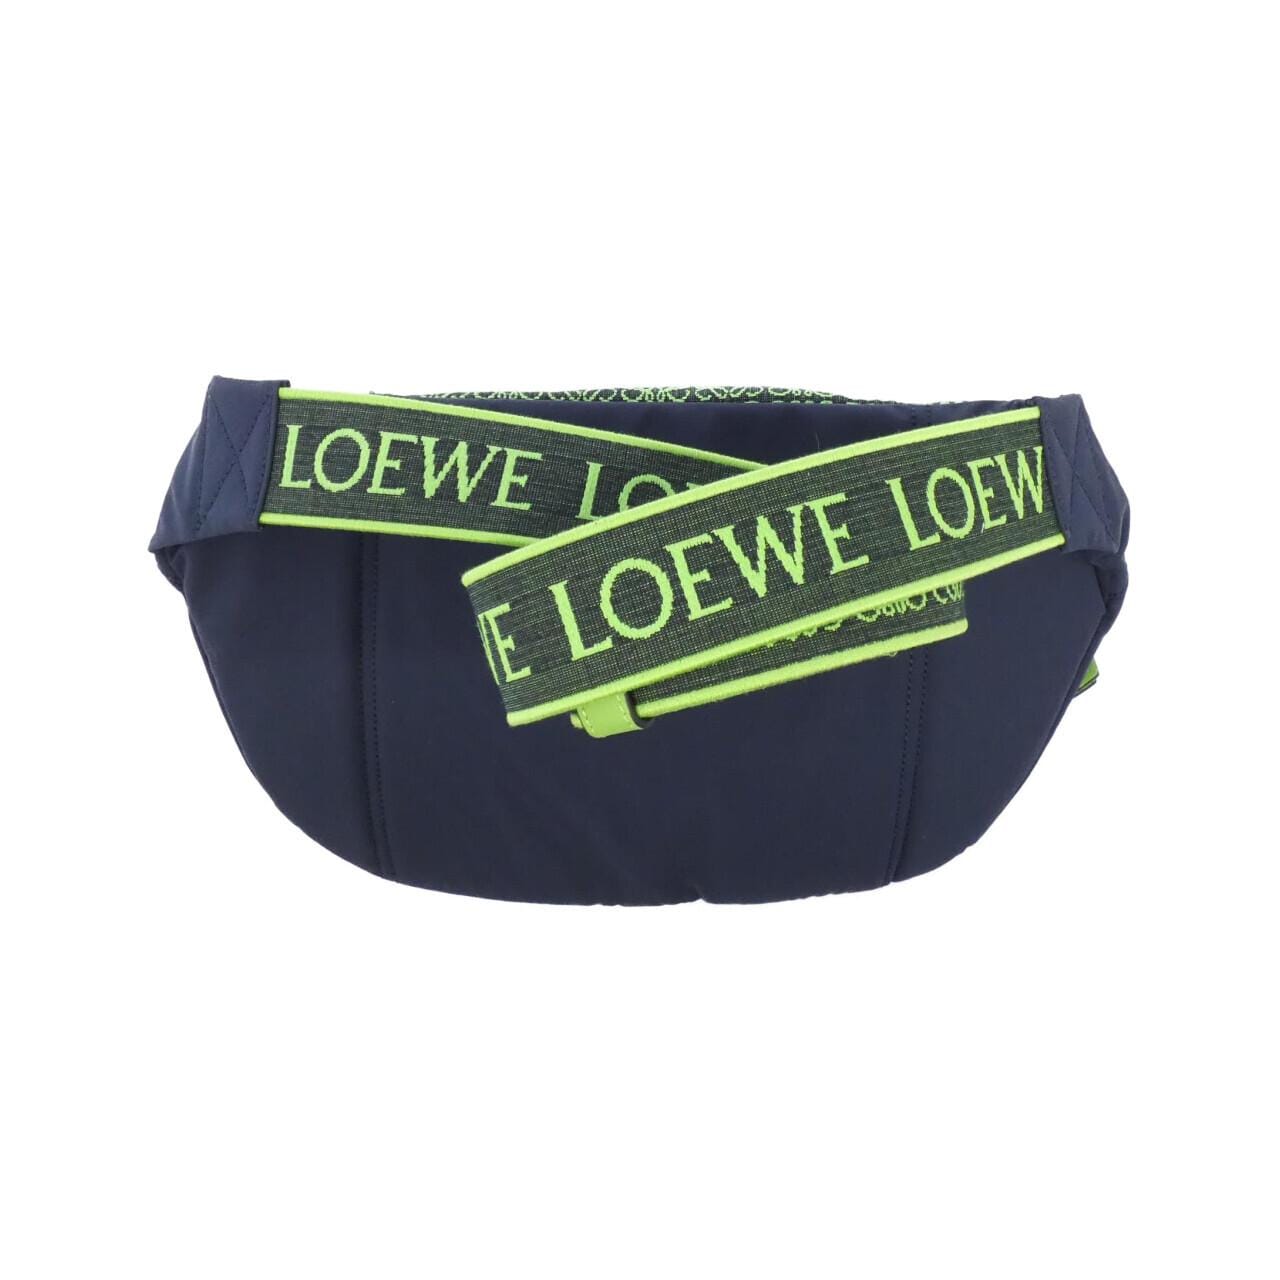 [新品] Loewe Anagram 腰包 B687A26X01 包